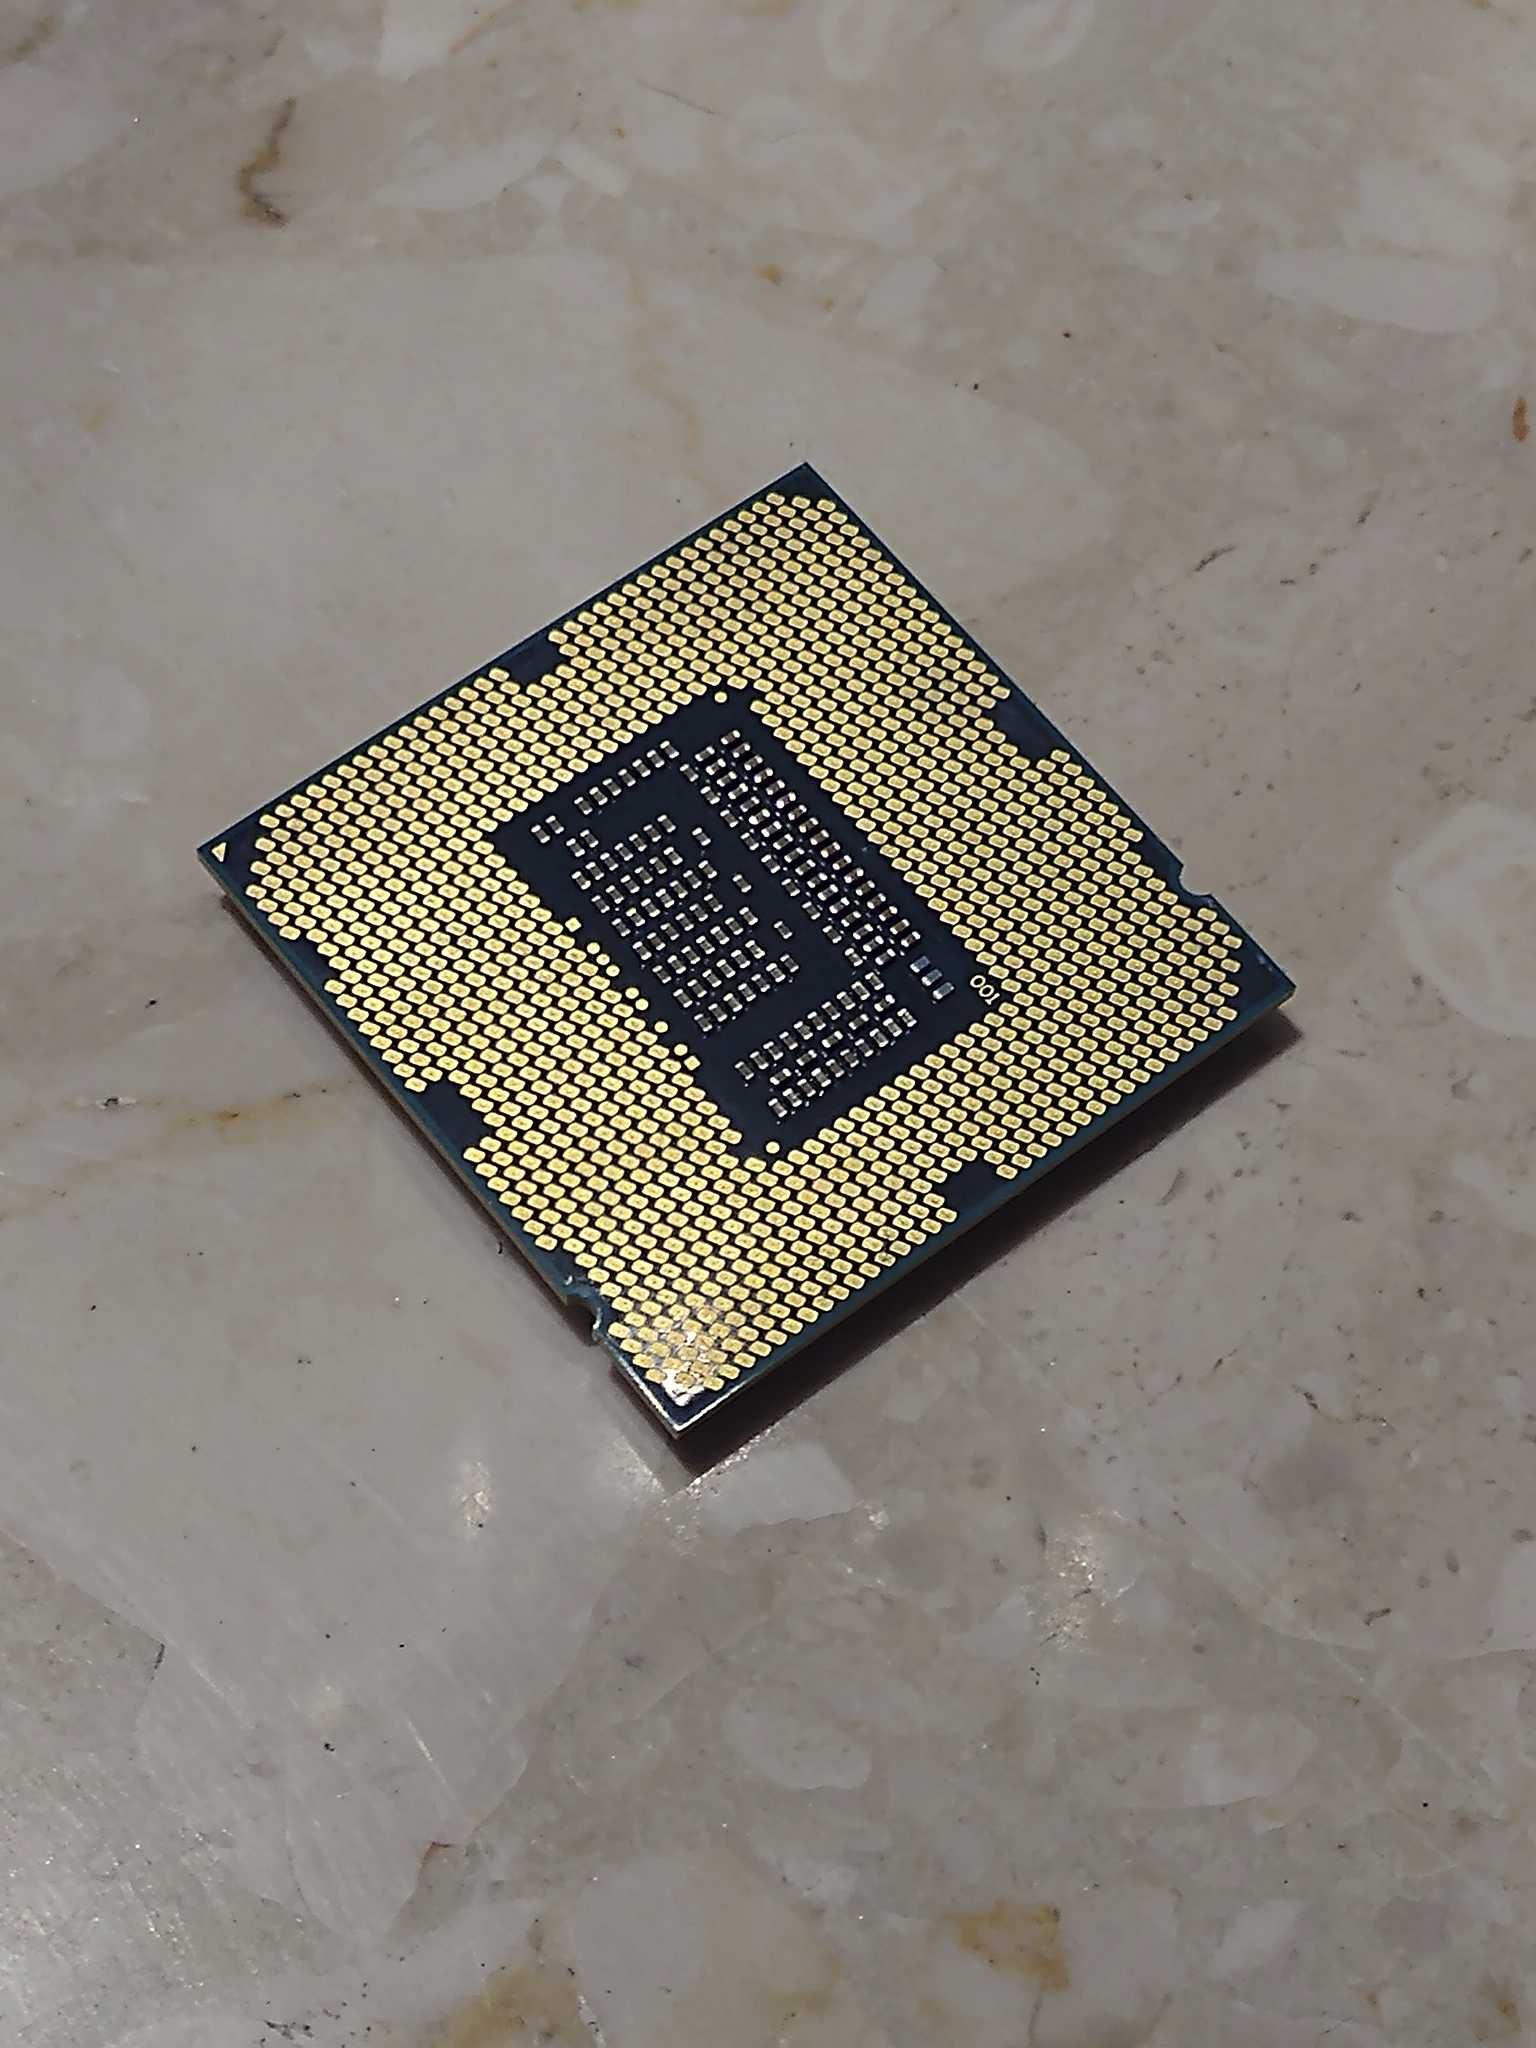 Procesor Intel i5-3570k 4.3Ghz OC 1.275v + Thermal Grizzly Kryonaut